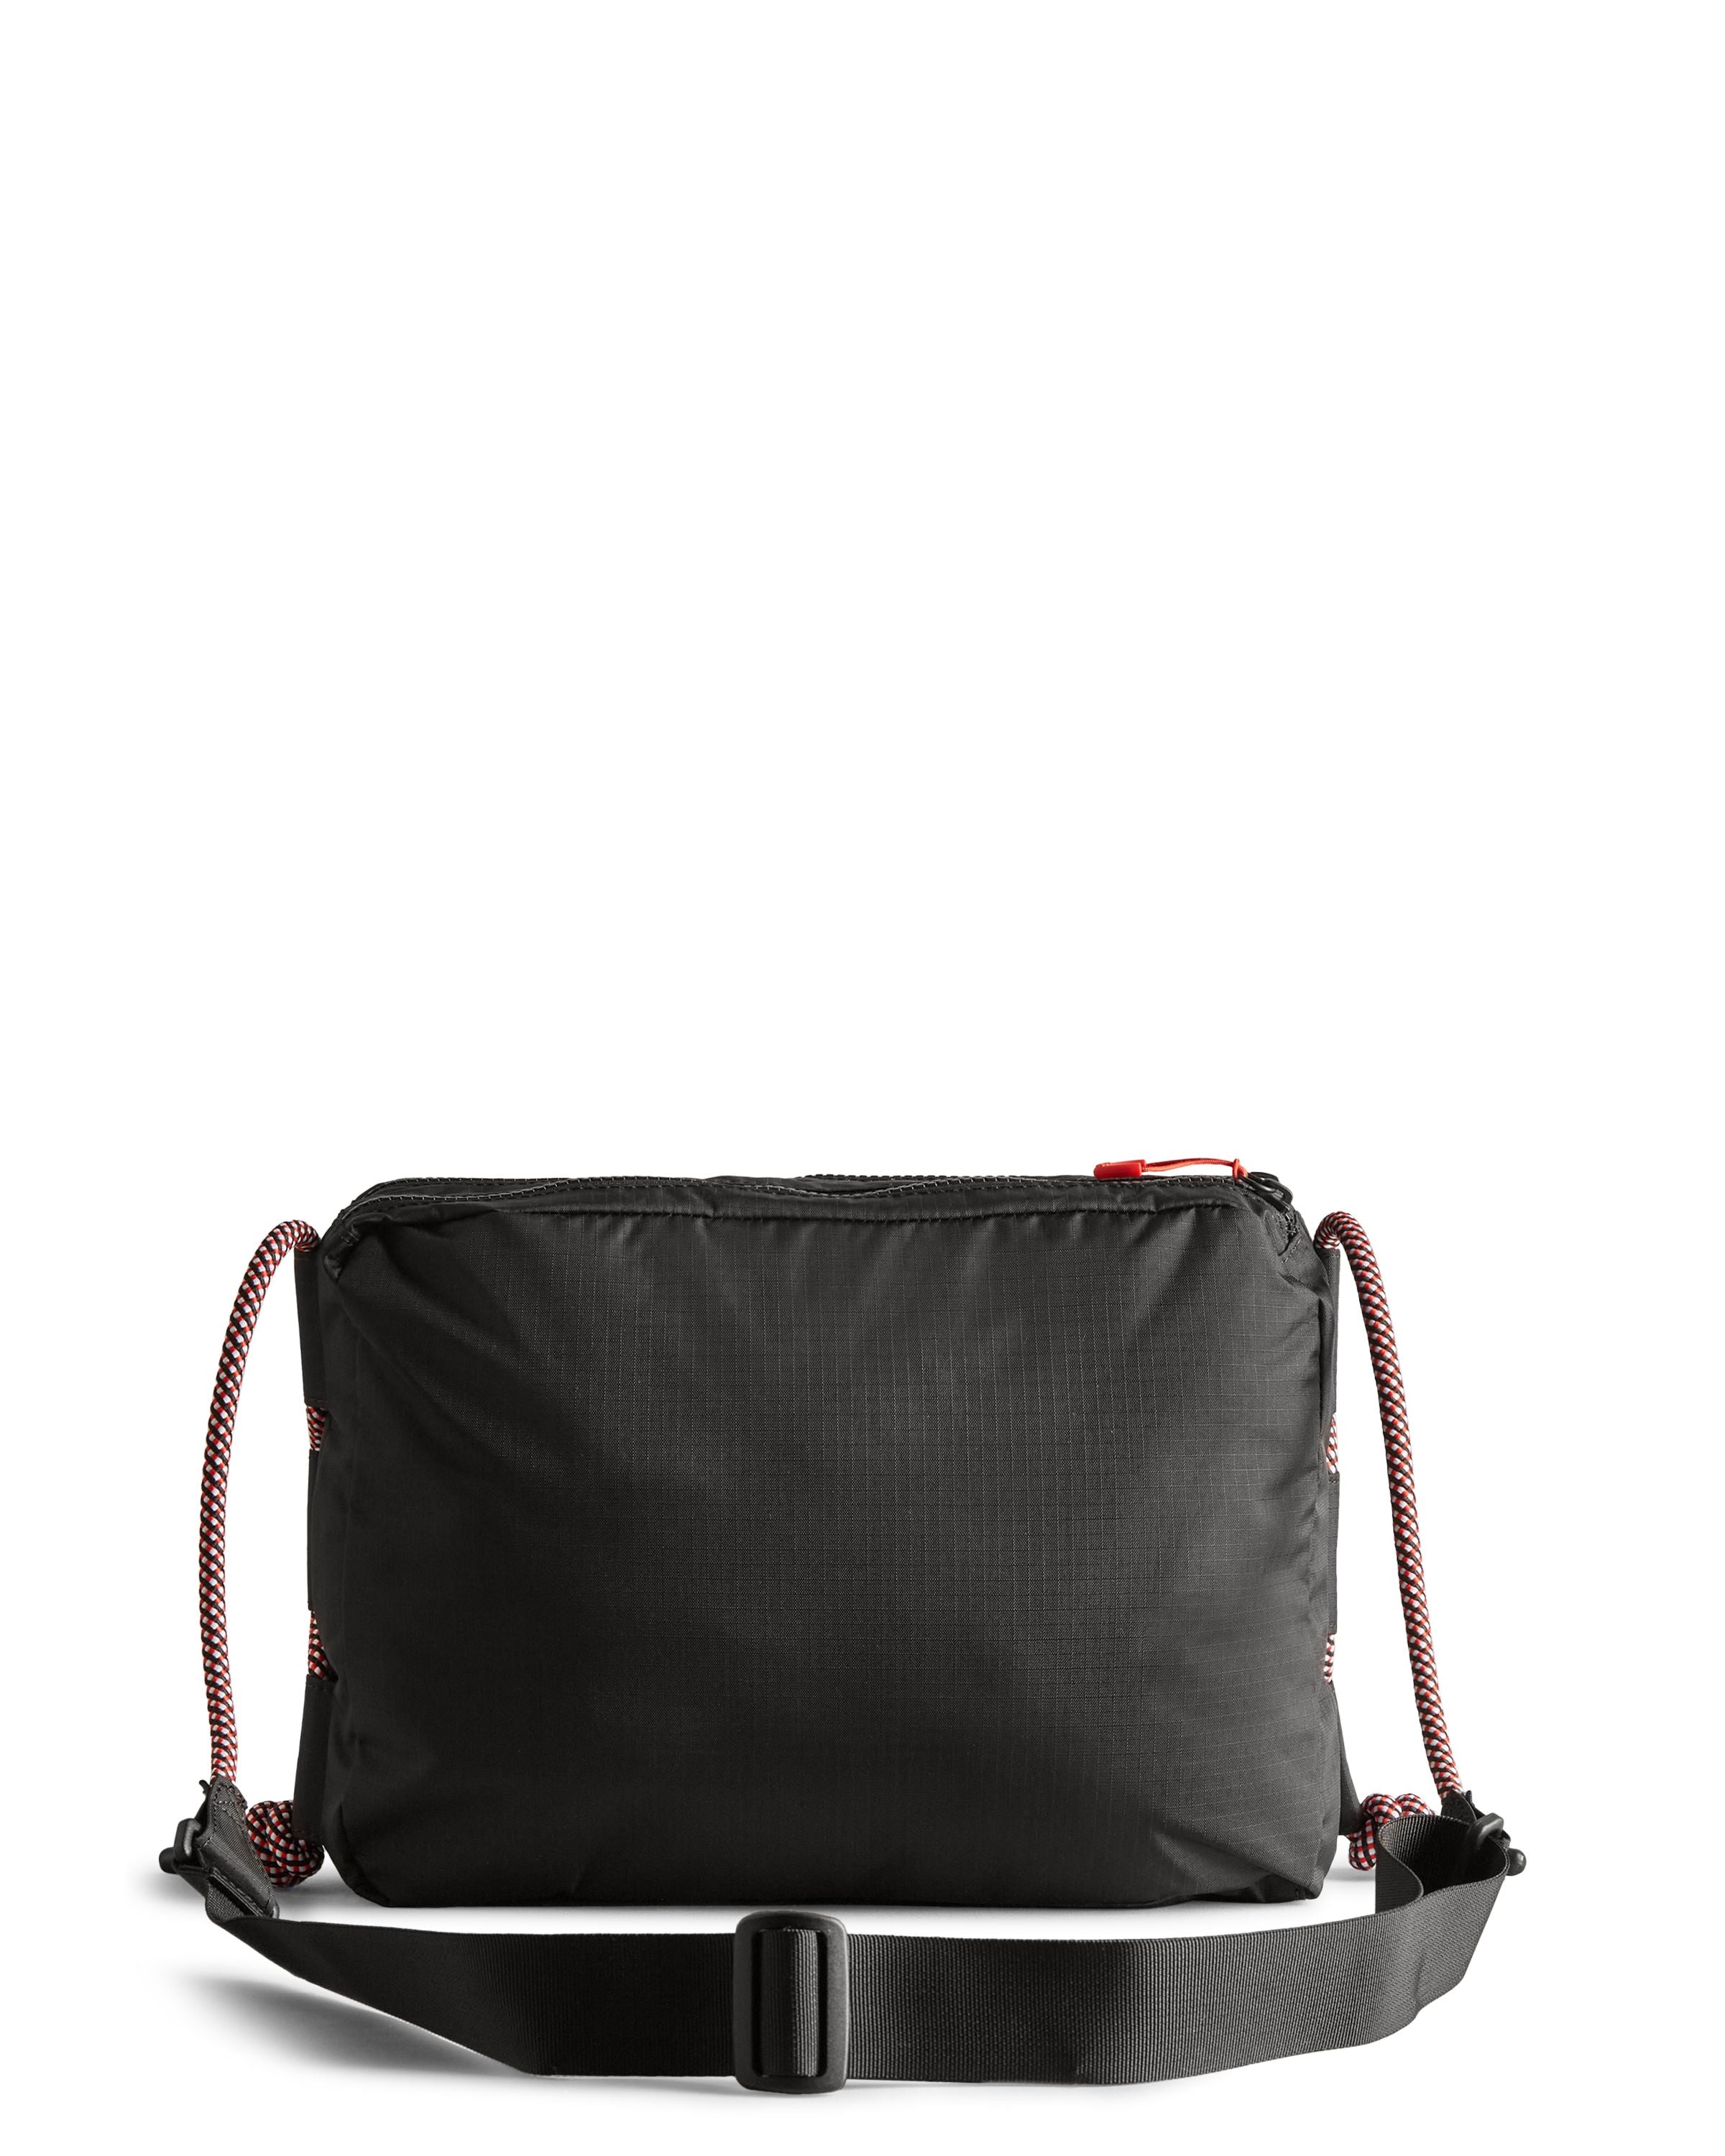 Travel Ripstop Recycled Nylon Sacoche - Black/Red Box Logo